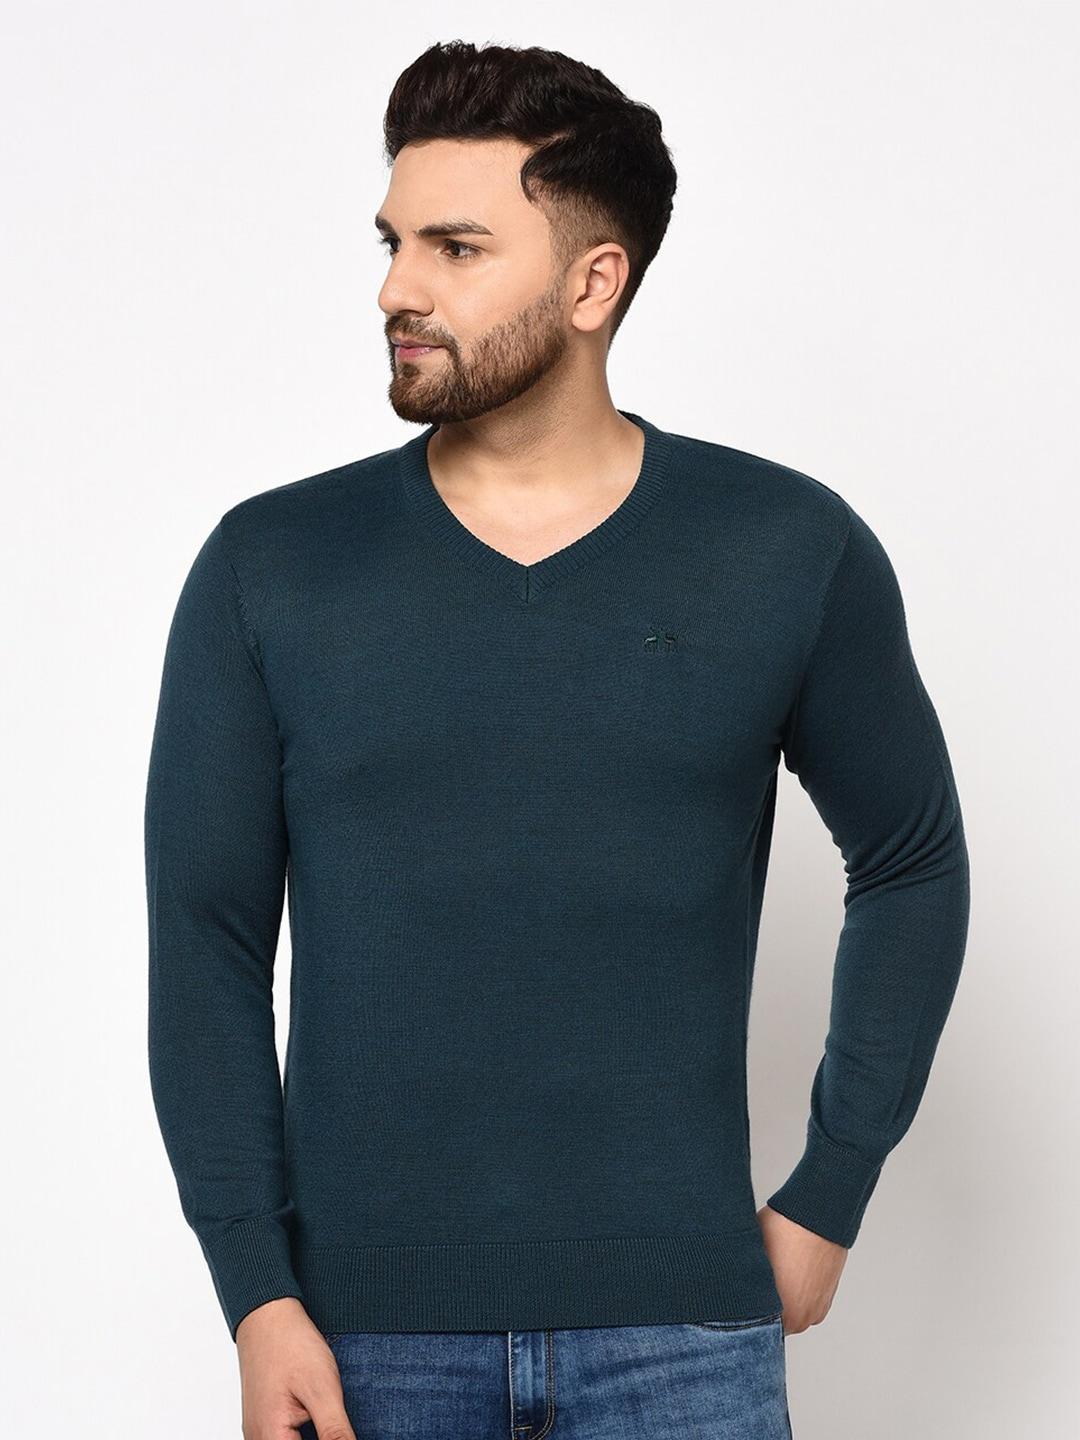 98-degree-north-men-teal-solid-v-neck-full-sleeves-sweater